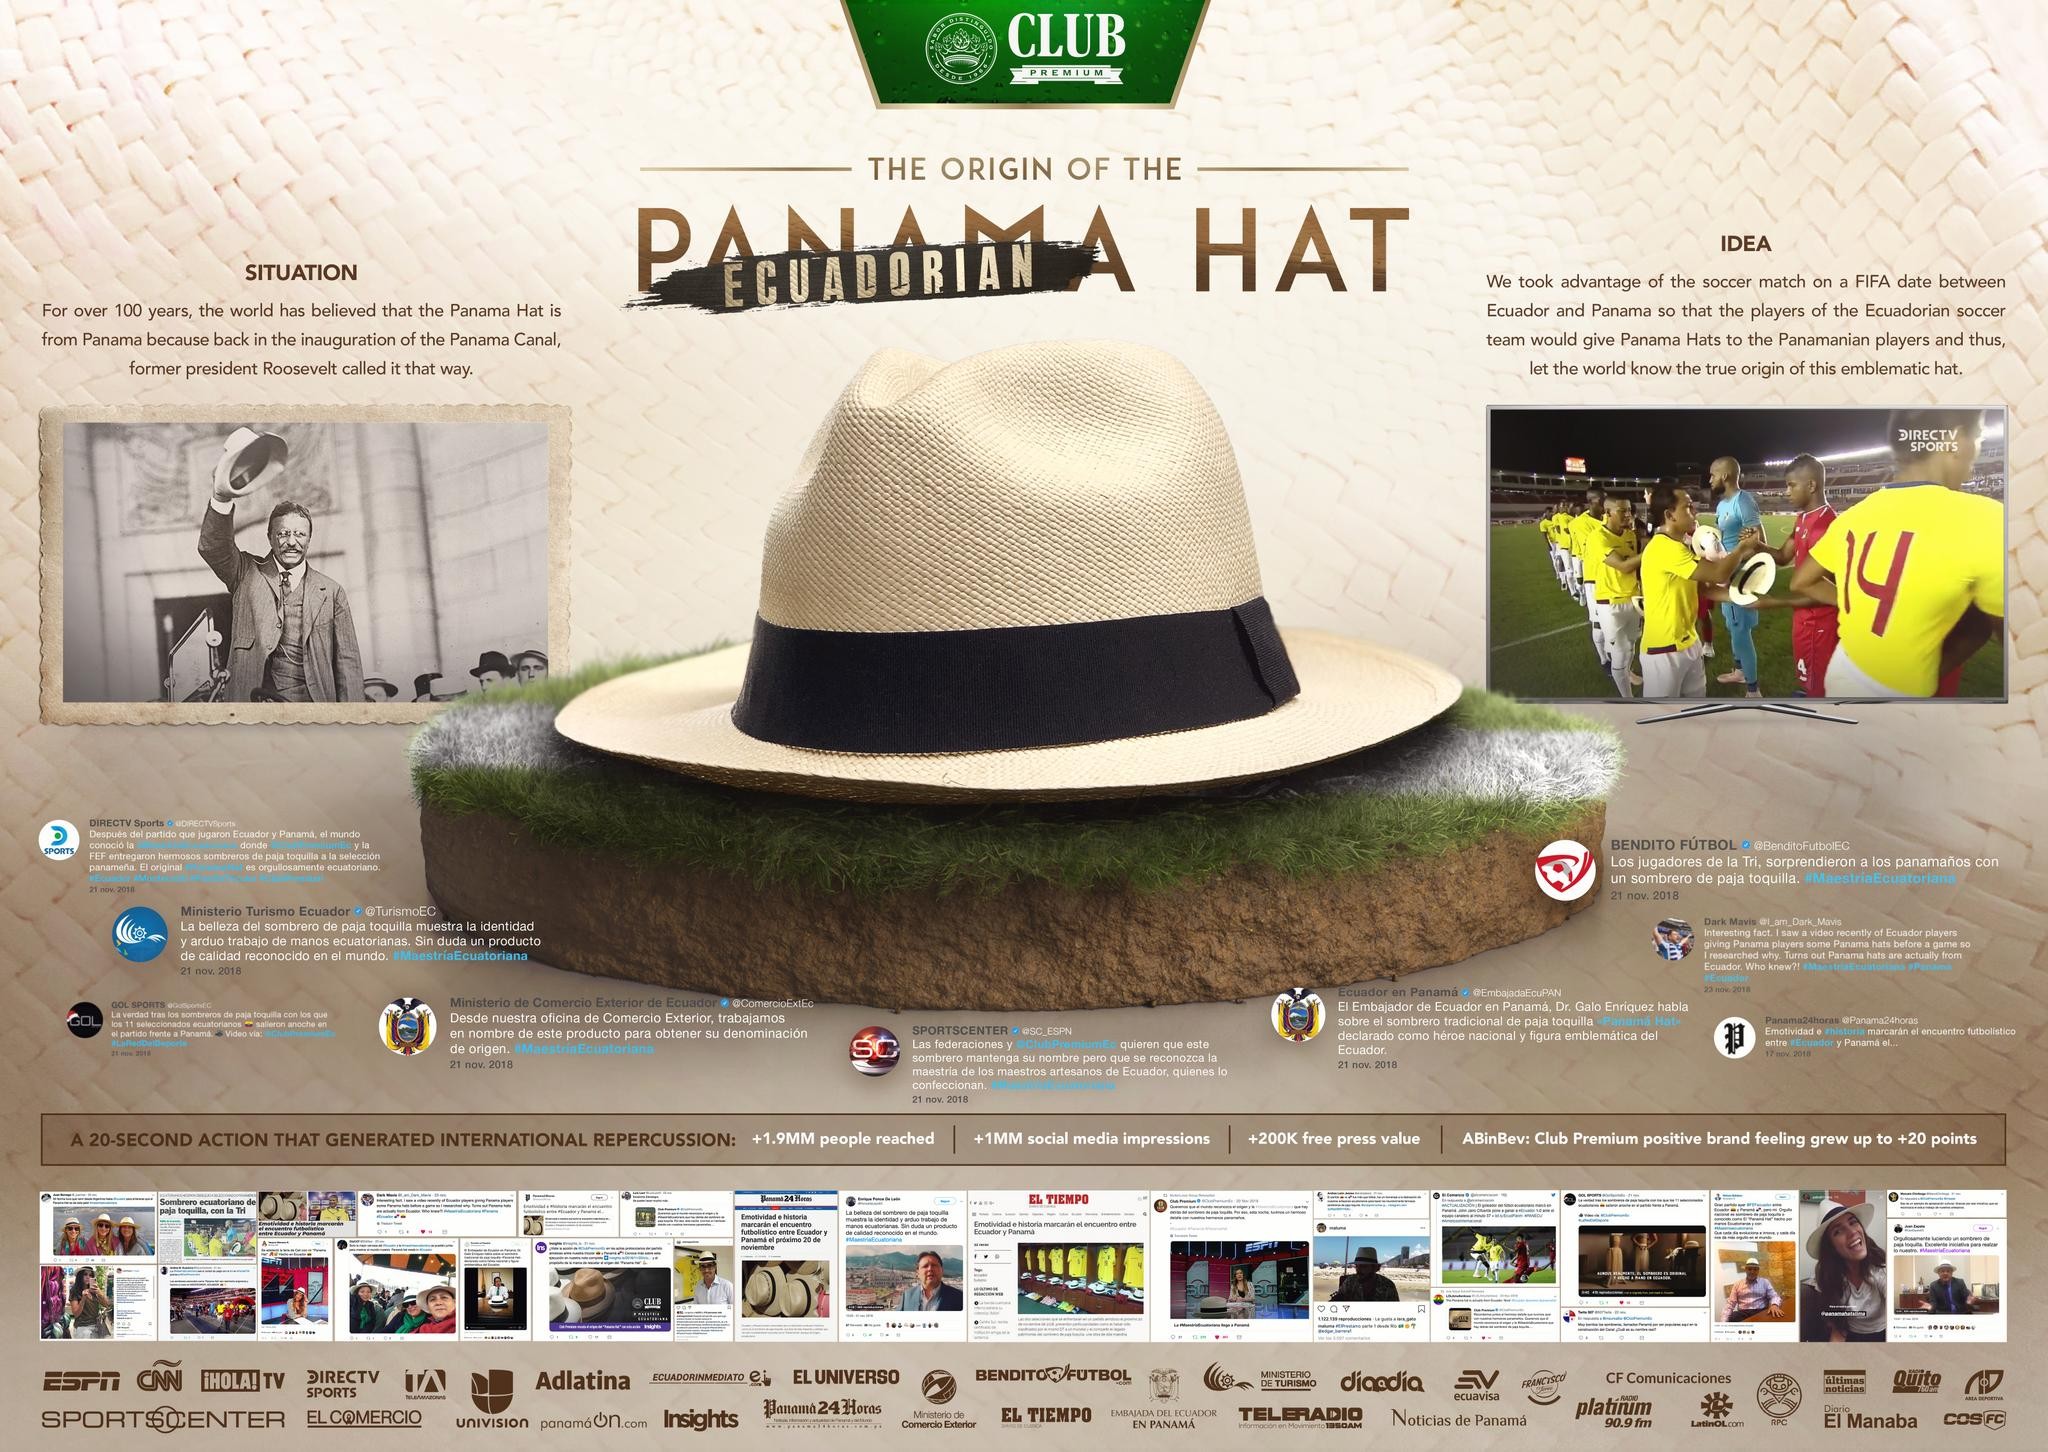 The Origin of the Panama Hat